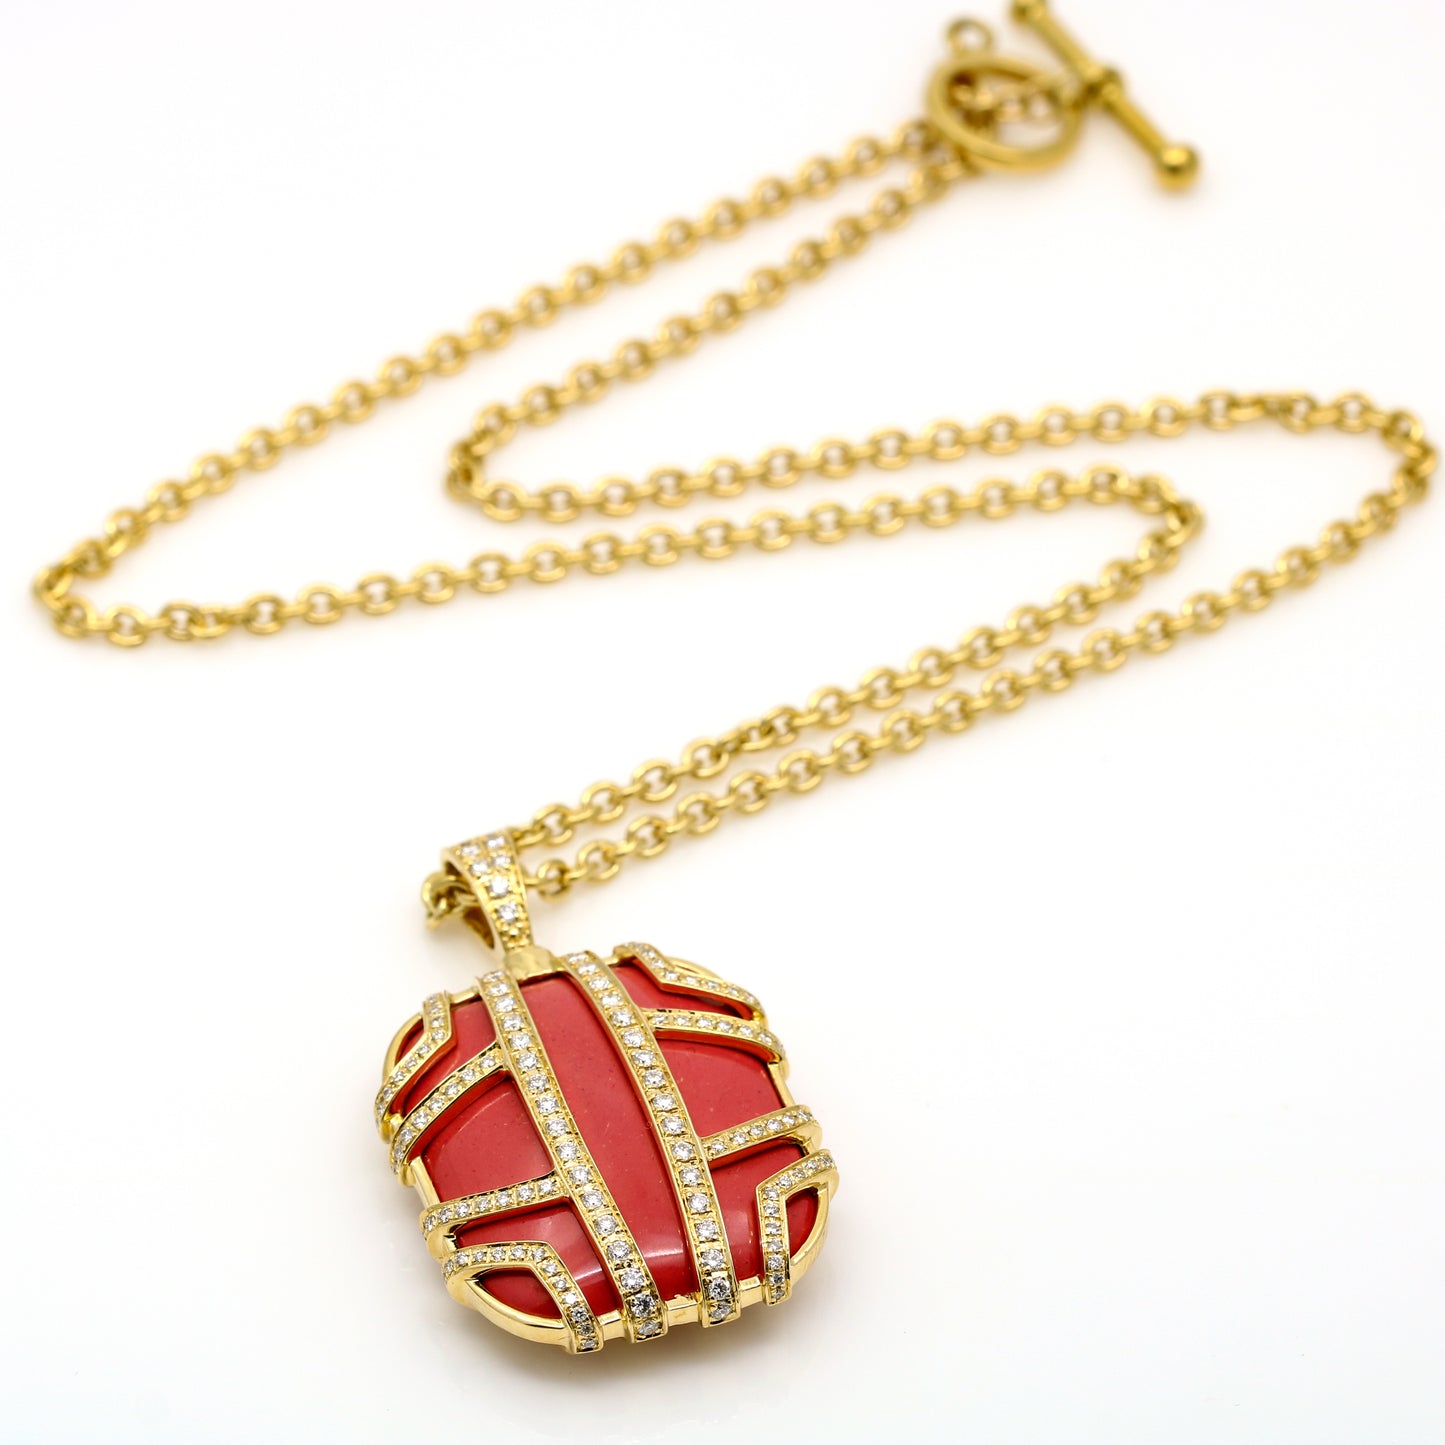 Di Modolo Favola Red Coral and Diamond Pendant Necklace in 18K Yellow Gold